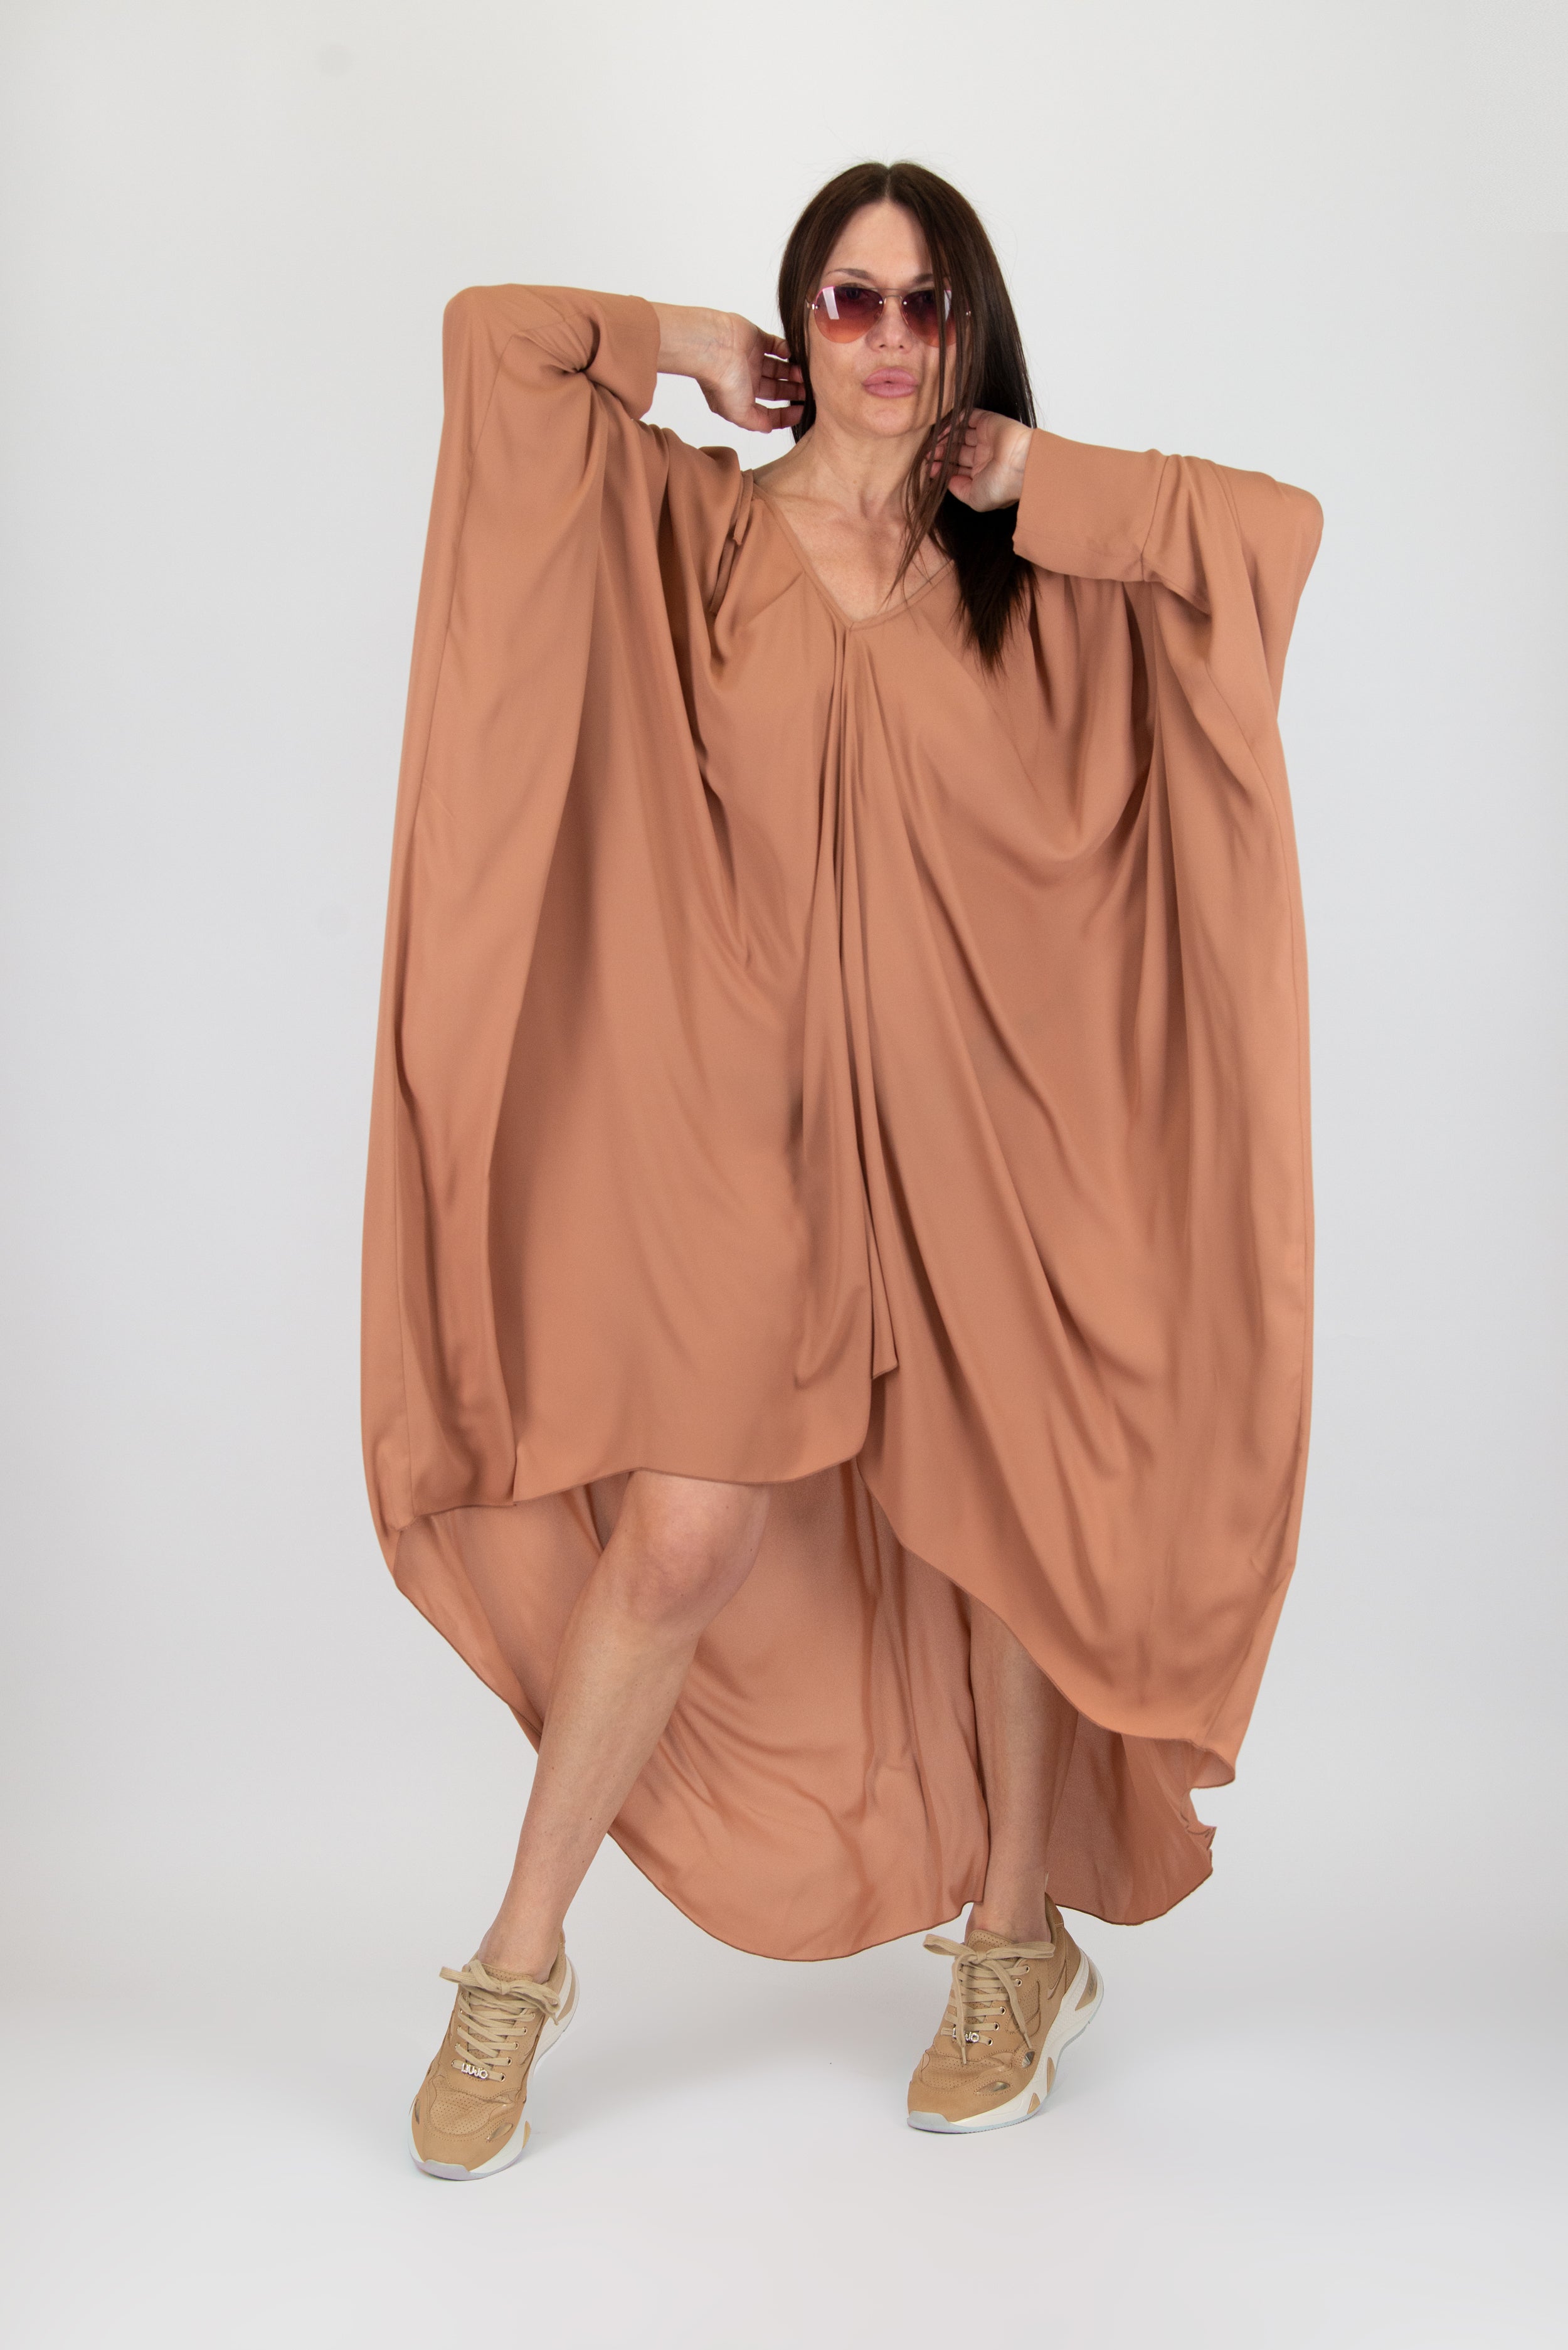 Nude Long Women Kaftan Dress by EUG Fashion